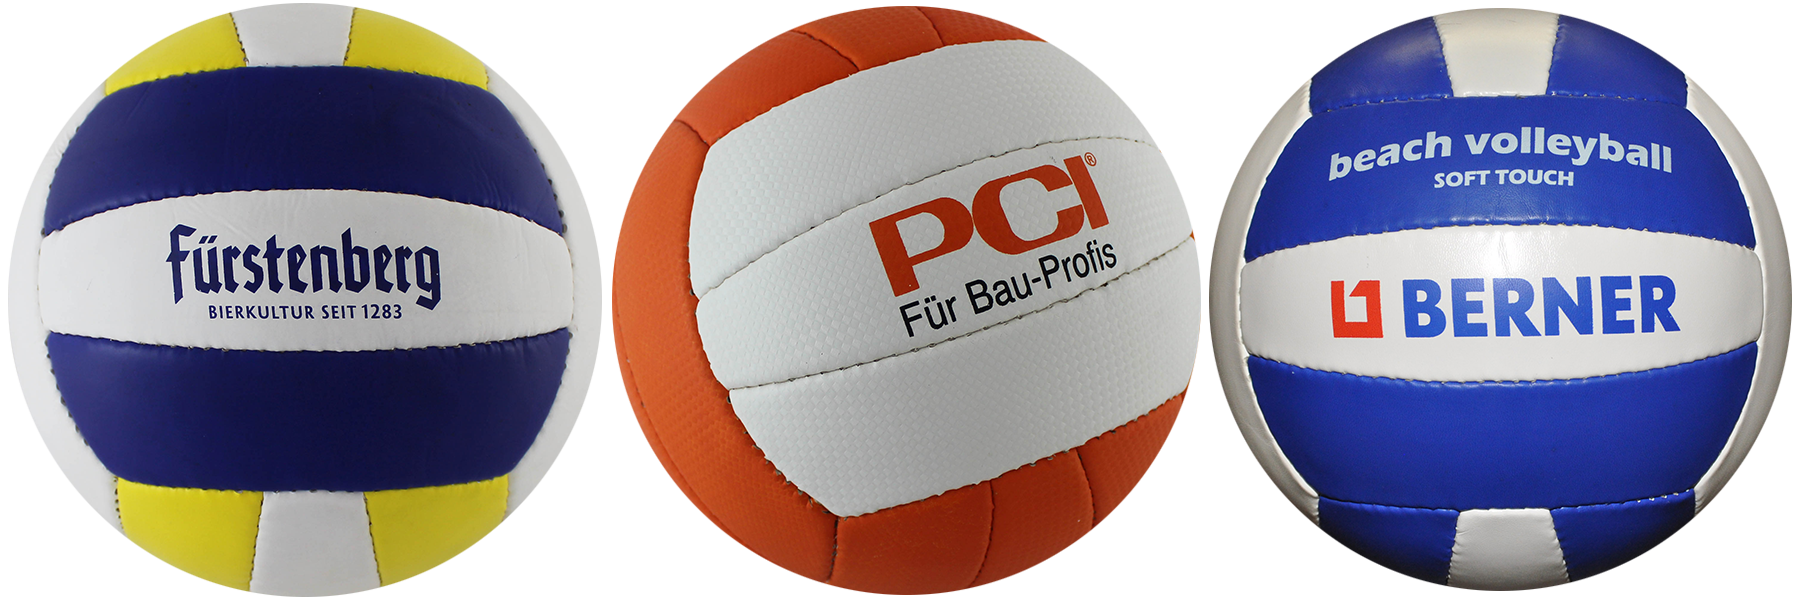 Promotion - Beachvolley- & Basketbälle | Werbeartikel - Werbegeschenke | rio Ballfabrik e.K.